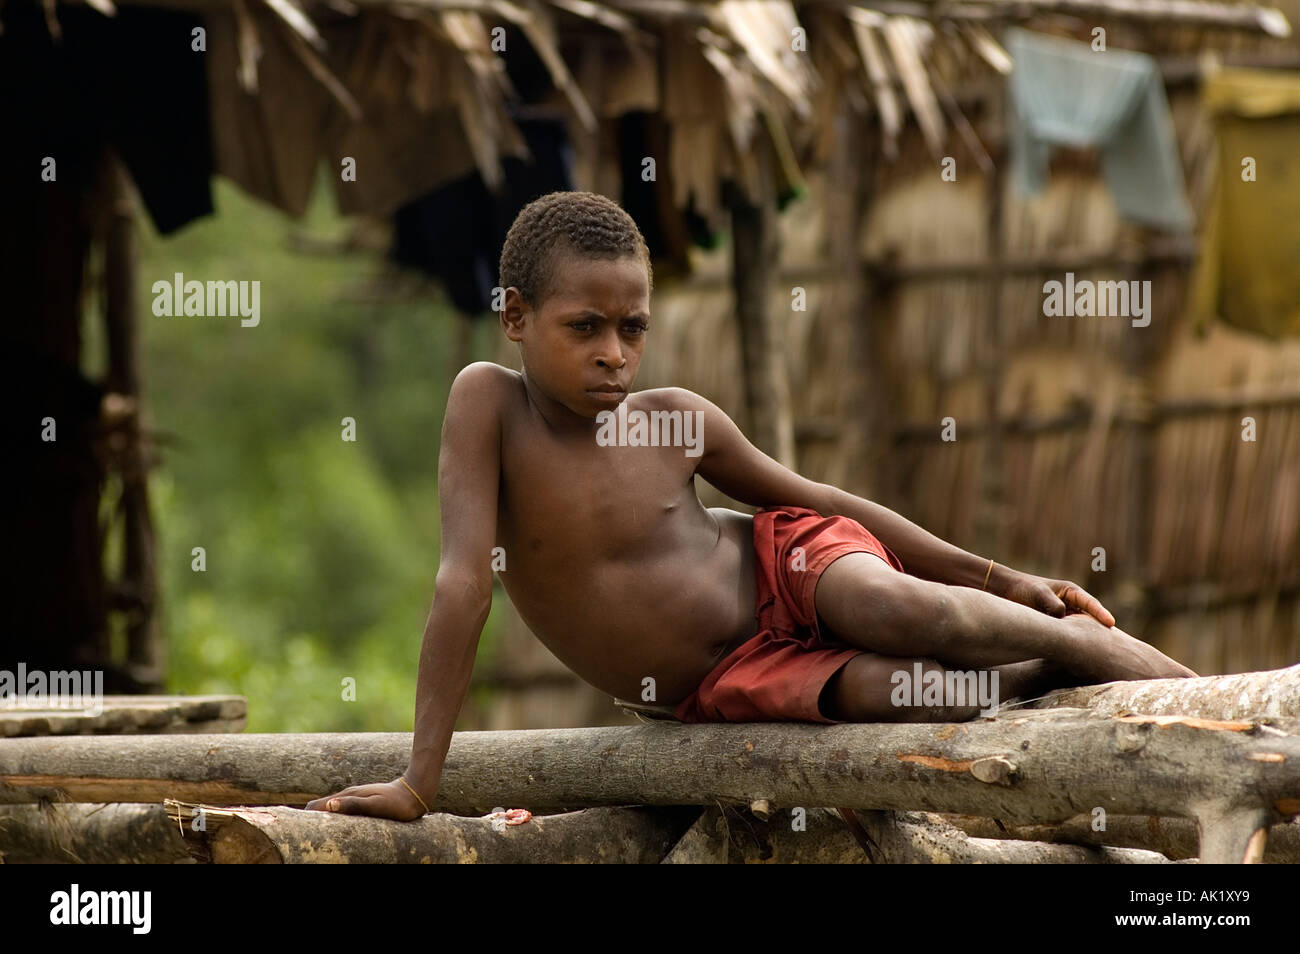 Asmat boy in Irian Jaya, Indonesia. Stock Photo